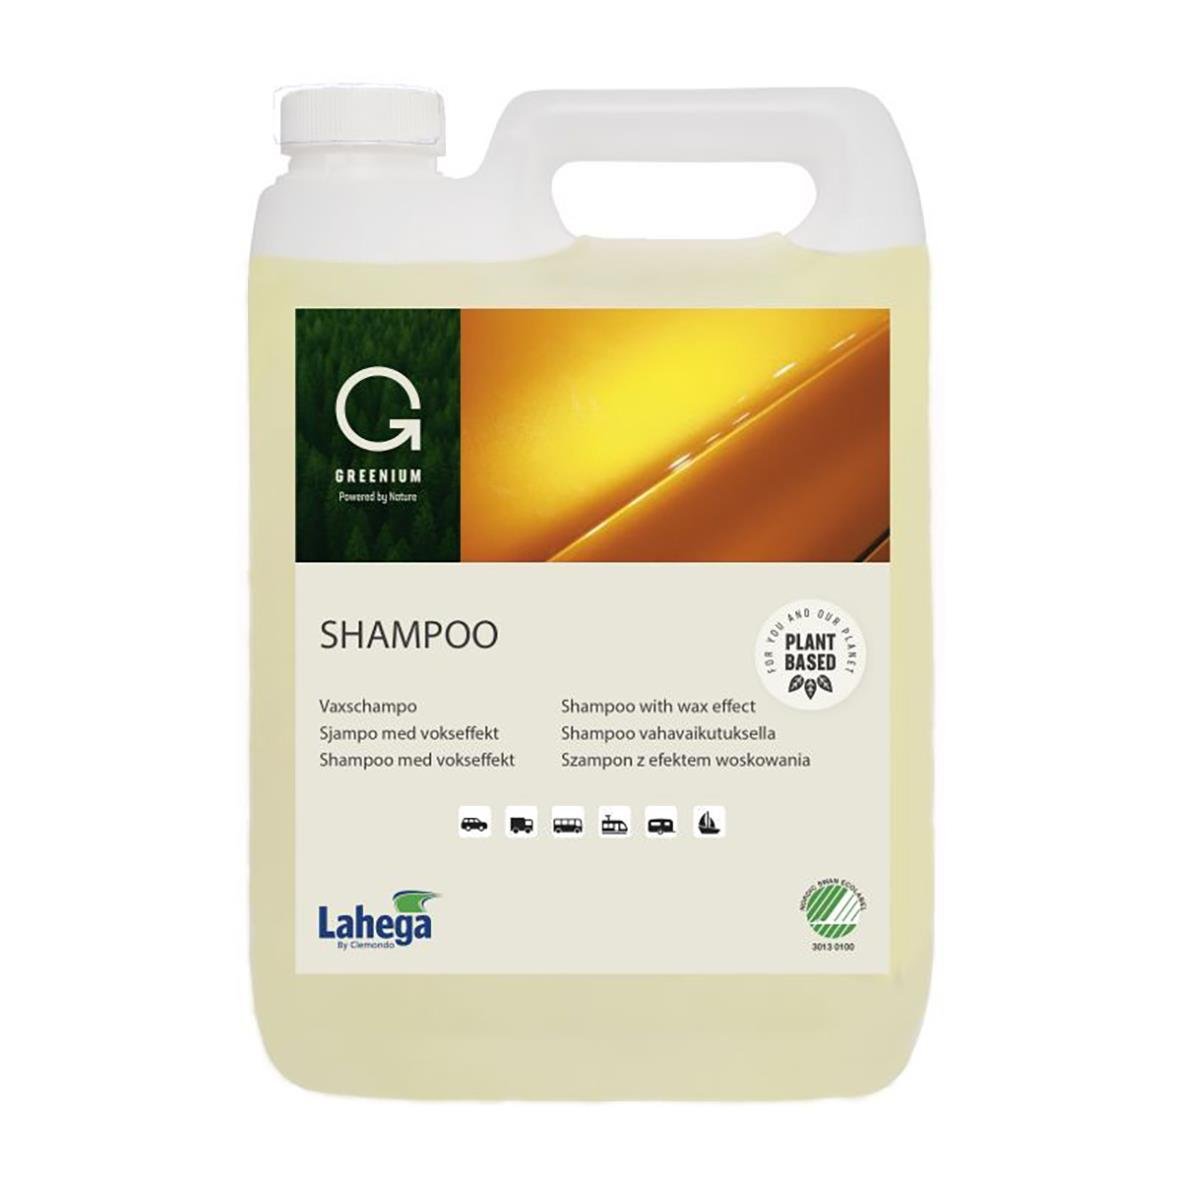 Shampoo Lahega Greenium 5L